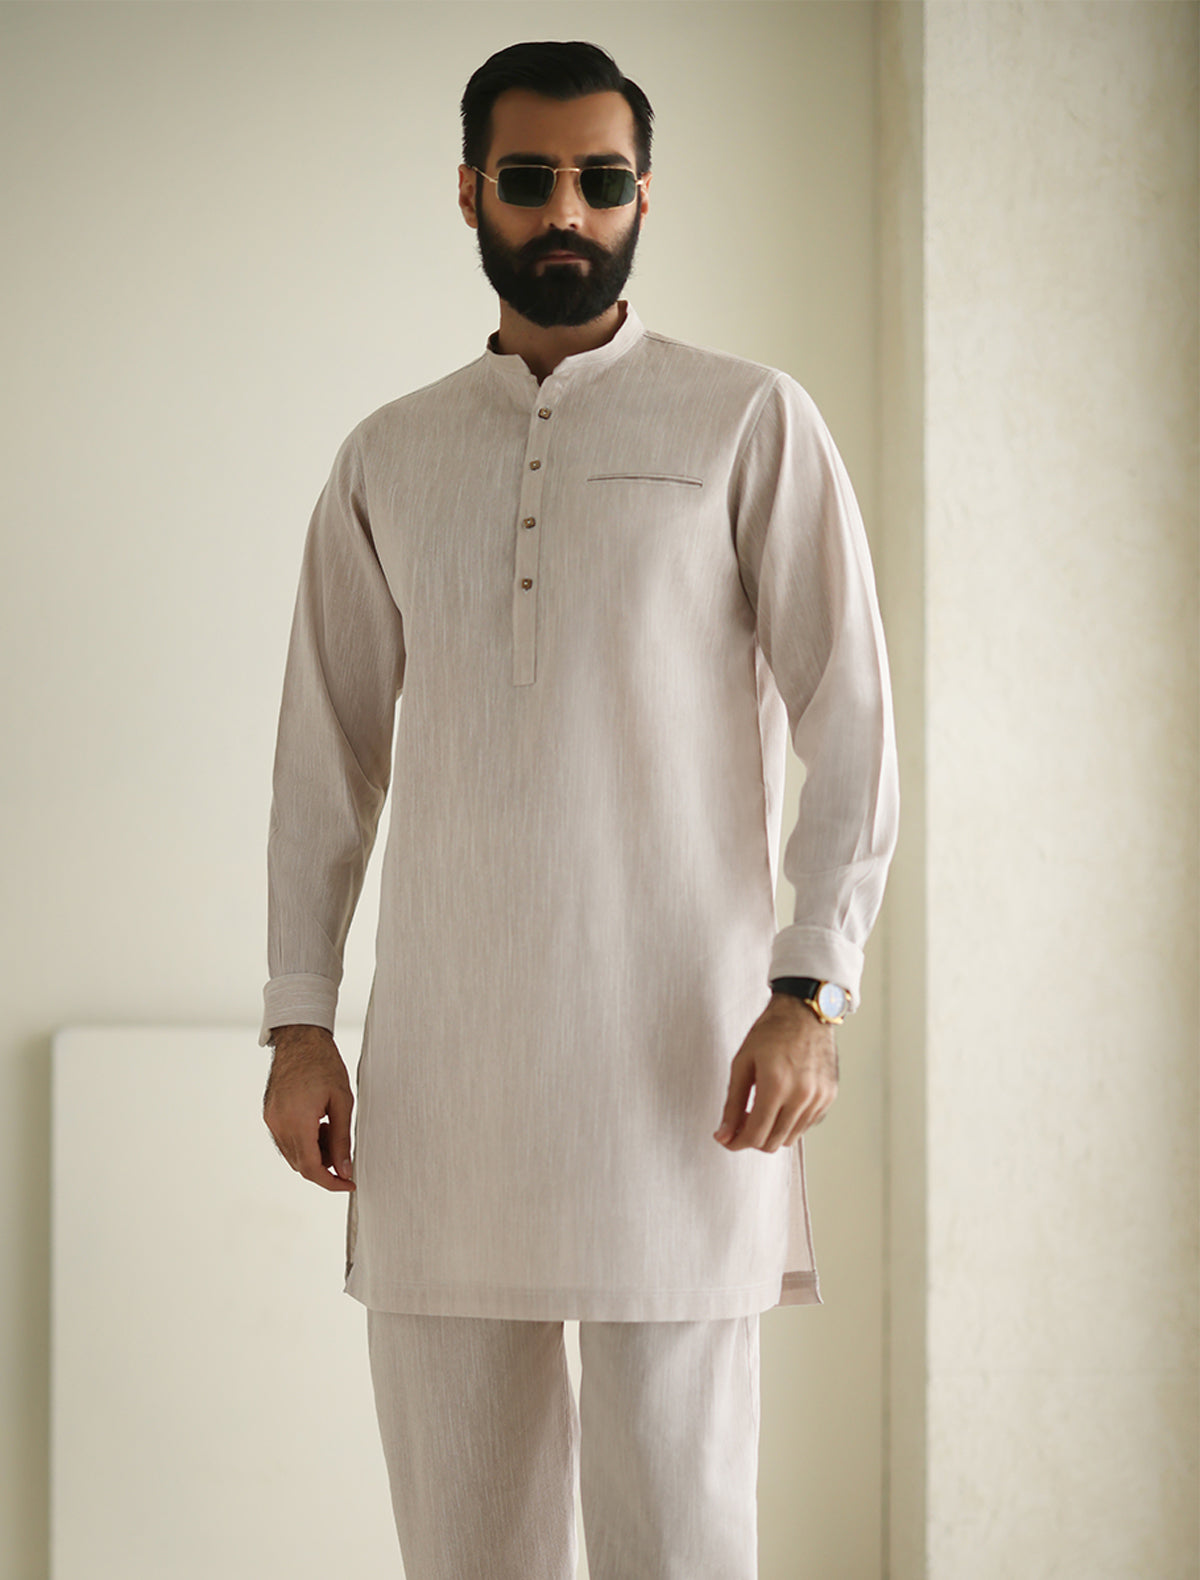 Pakistani Menswear | Ismail Farid - LIGHT BEIGE DESIGNER KURTA PAJAMA - Khanumjan  Pakistani Clothes and Designer Dresses in UK, USA 